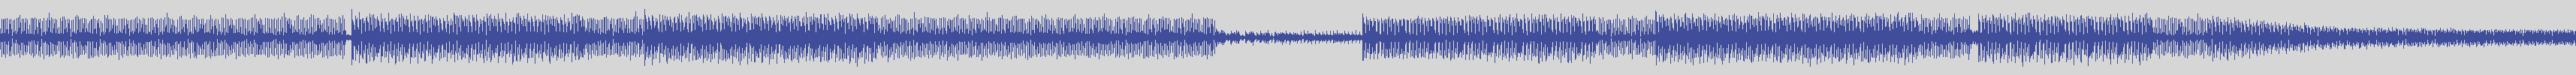 nf_boyz_records [NFY012] G Unit - Unicorno [Original Mix] audio wave form